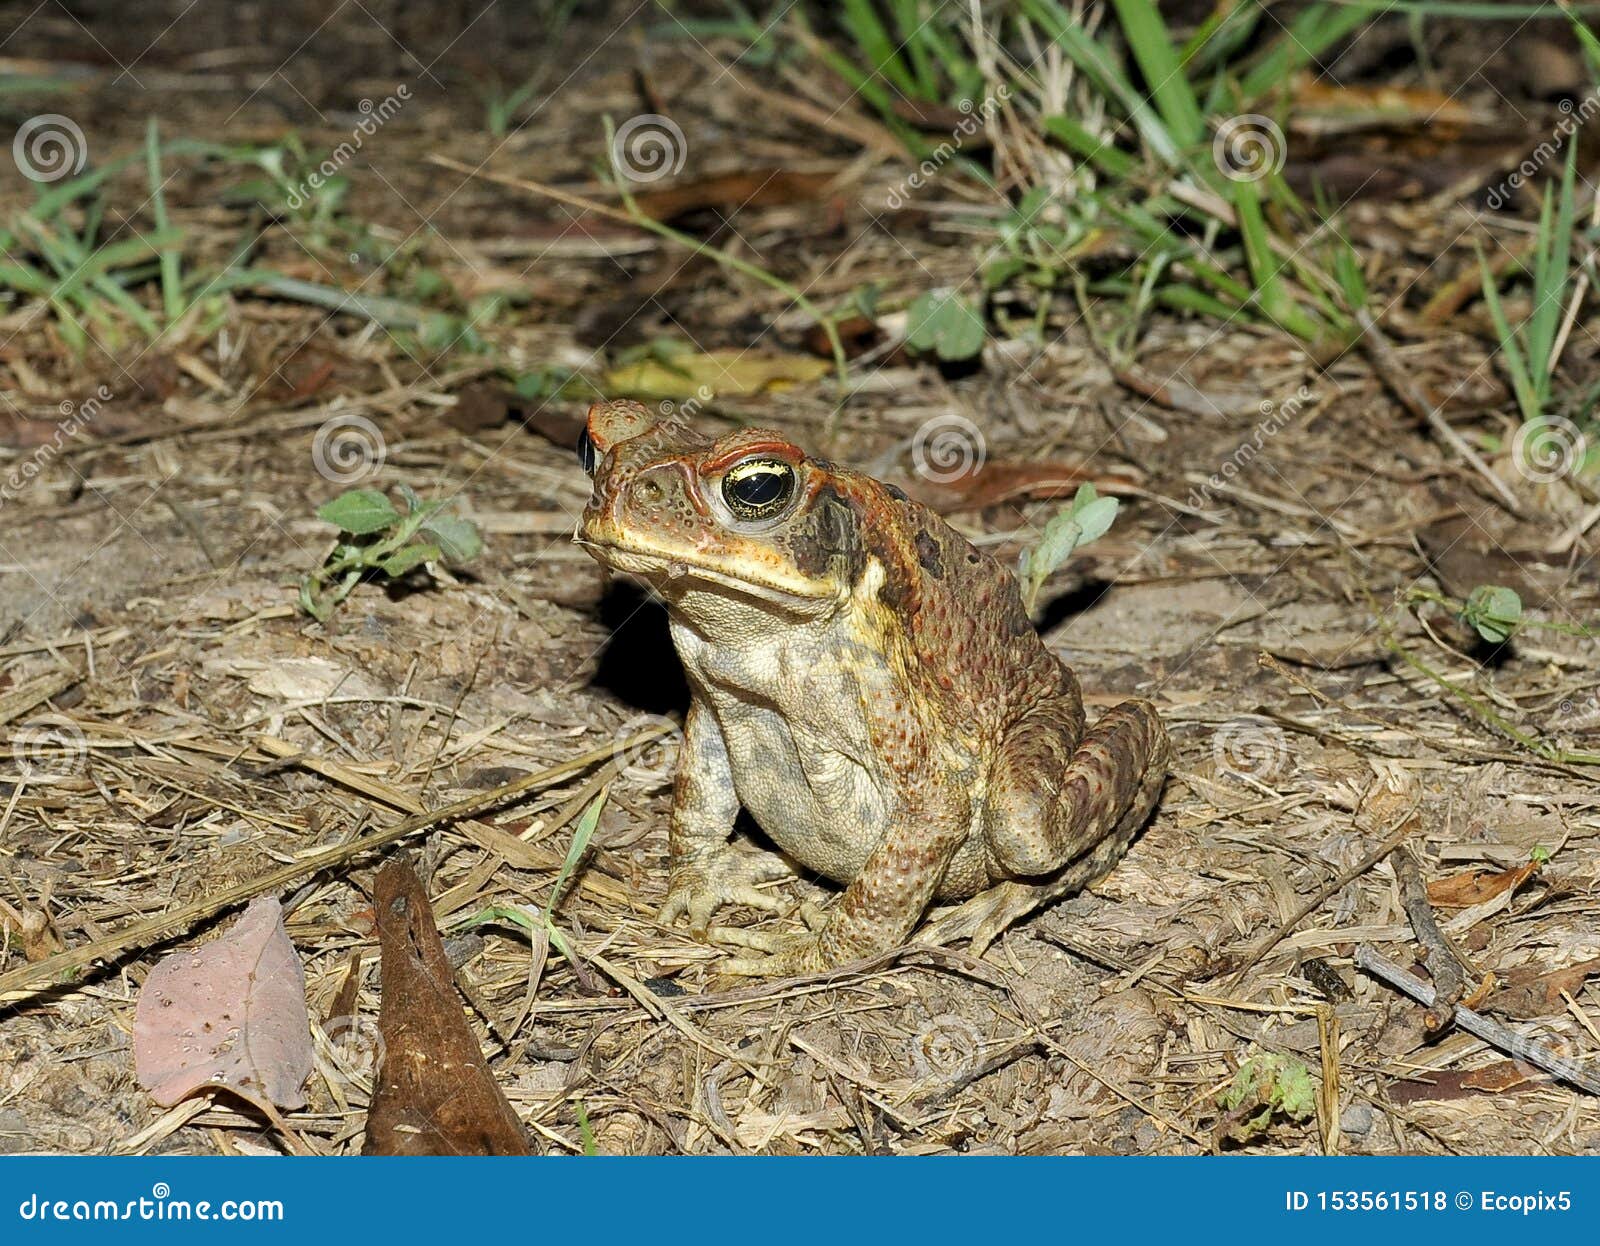 cane or marine toad bufa marinus